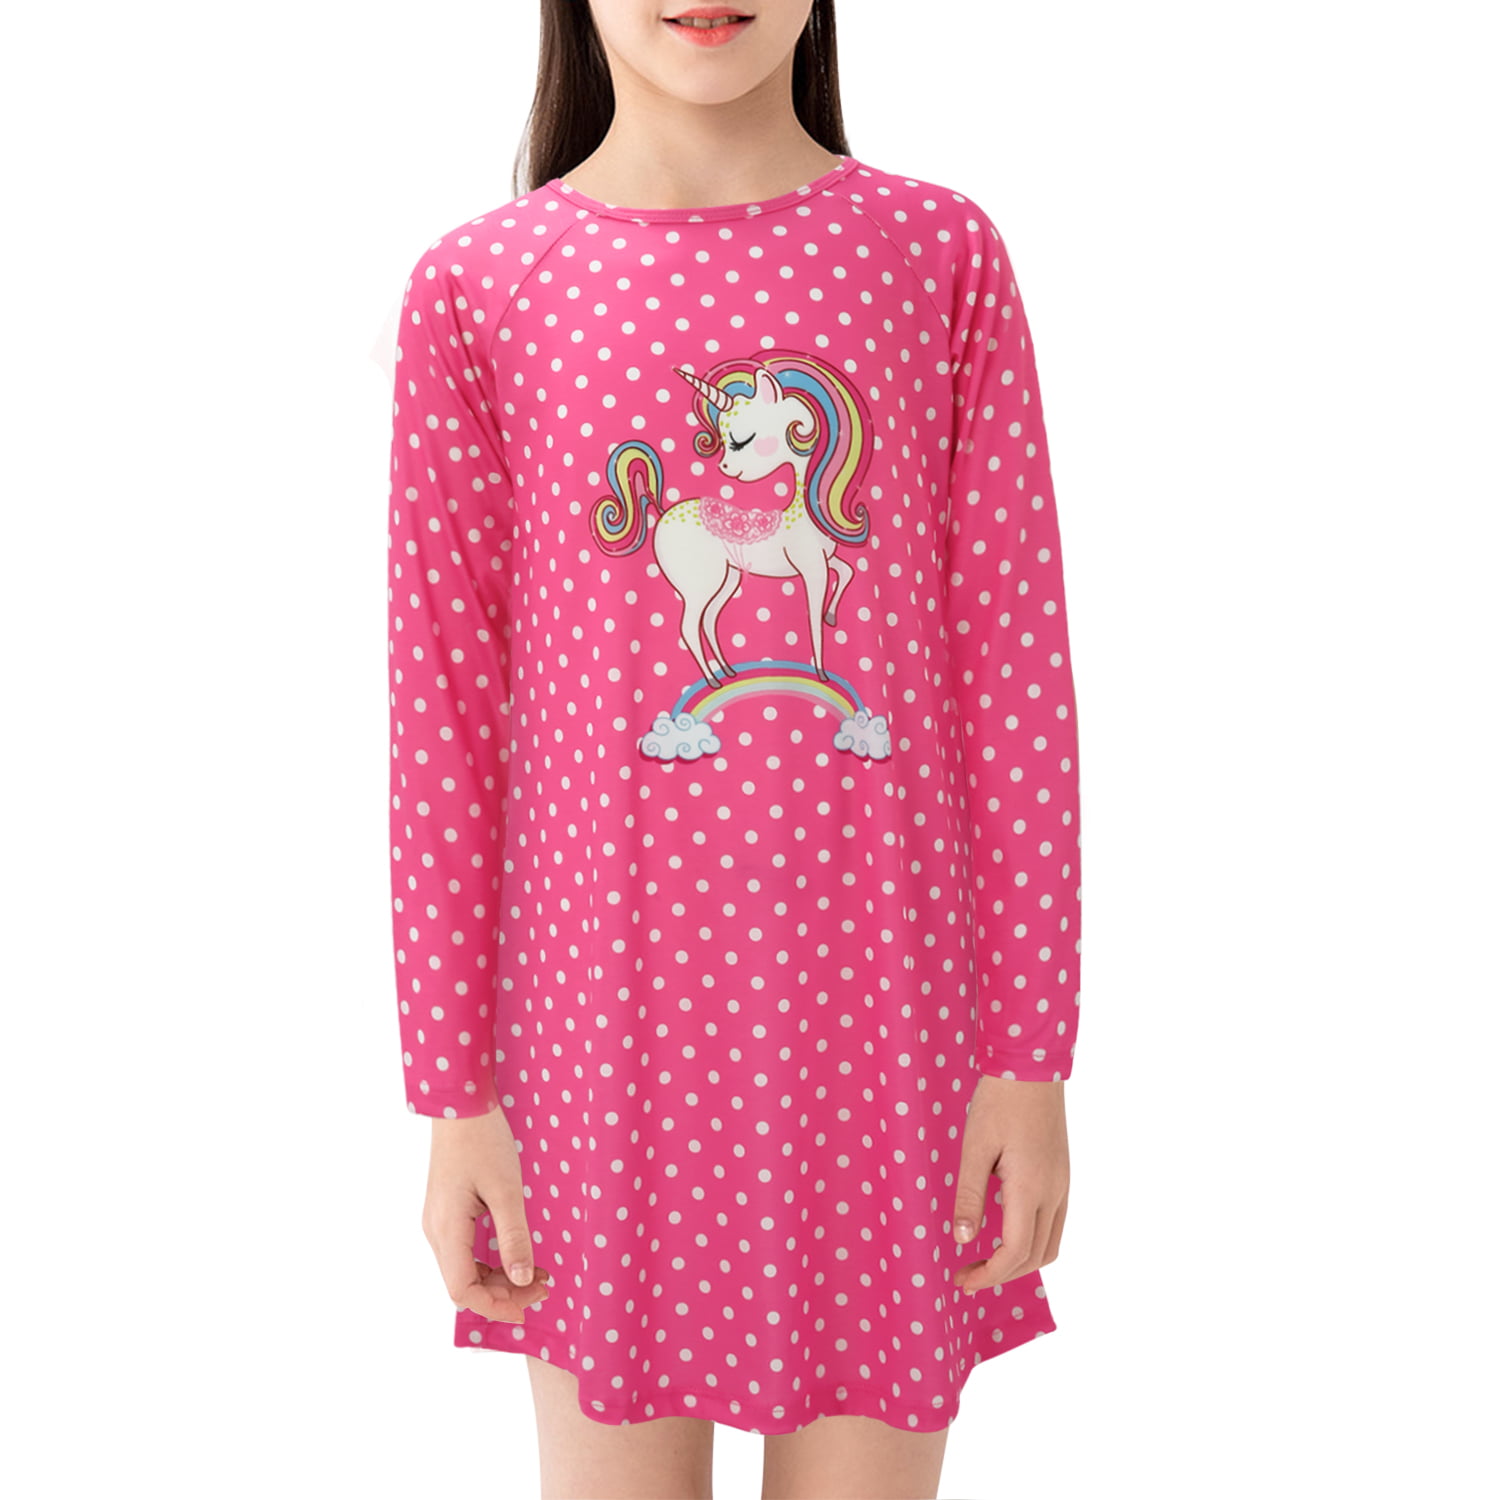 Girl's nighties Strawberry Sleepwear Cotton Cute Fruit Princess Nightdress Blue Pink toddler kids